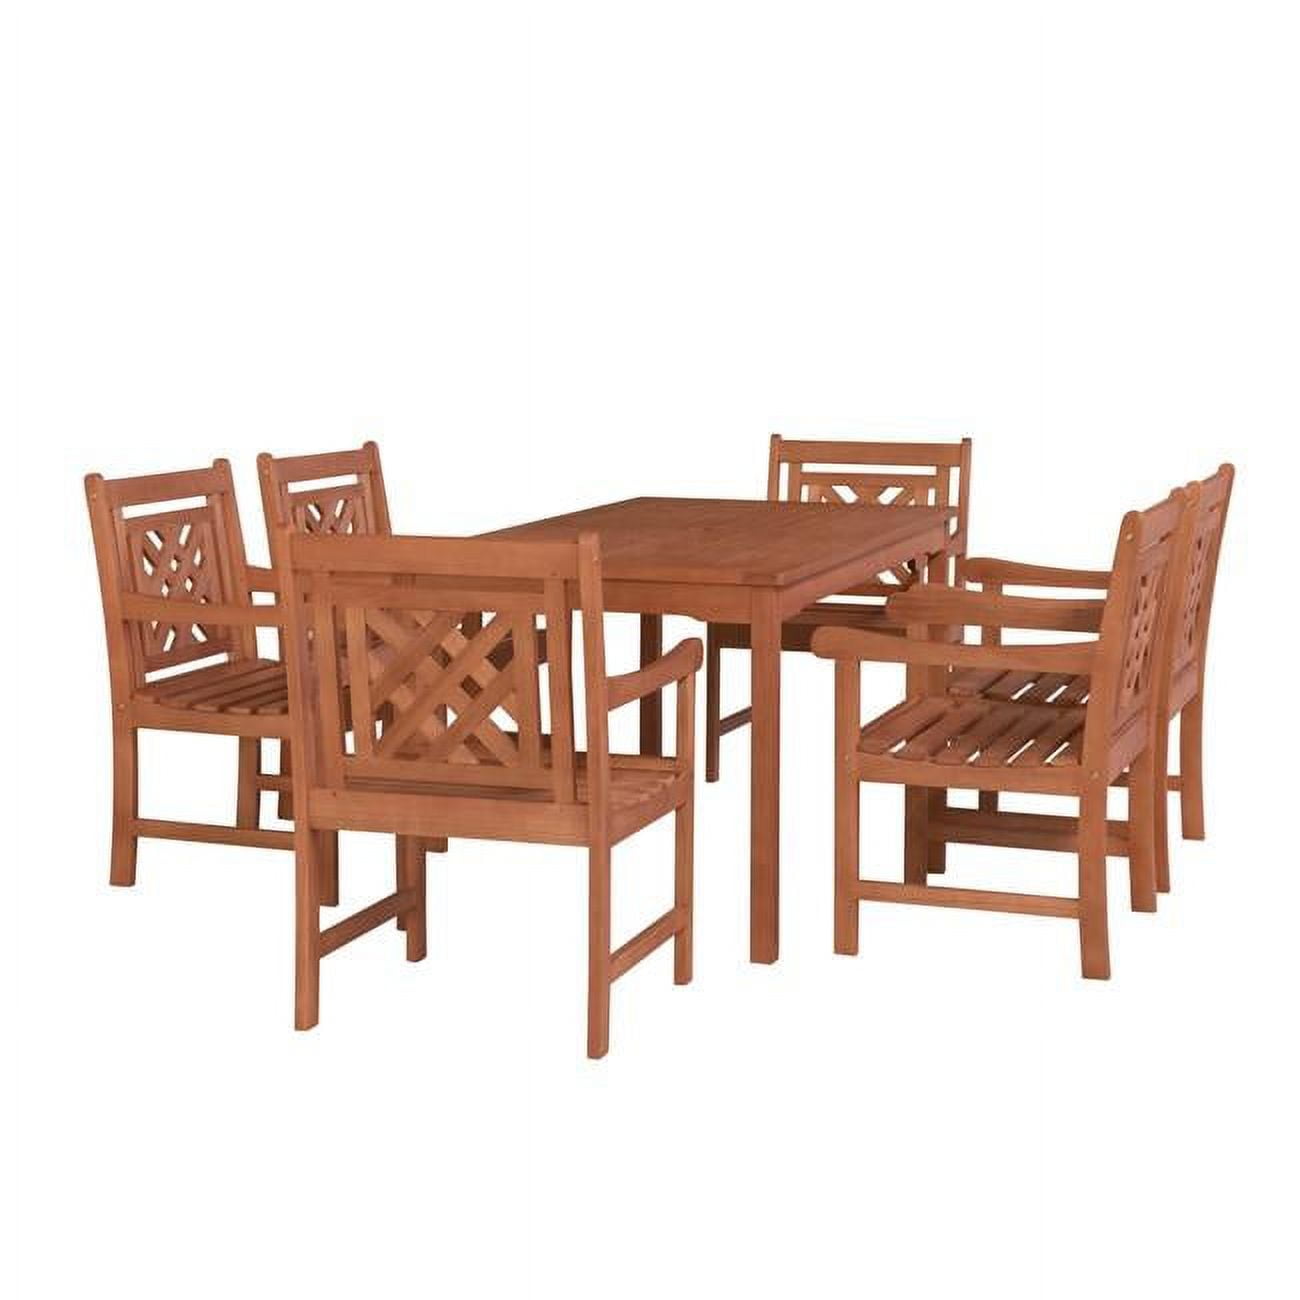 V98set72 Malibu Outdoor Wood Patio Rectangular Table Dining Set, Natural Wood - 34 X 22 X 24 In. - 7 Piece